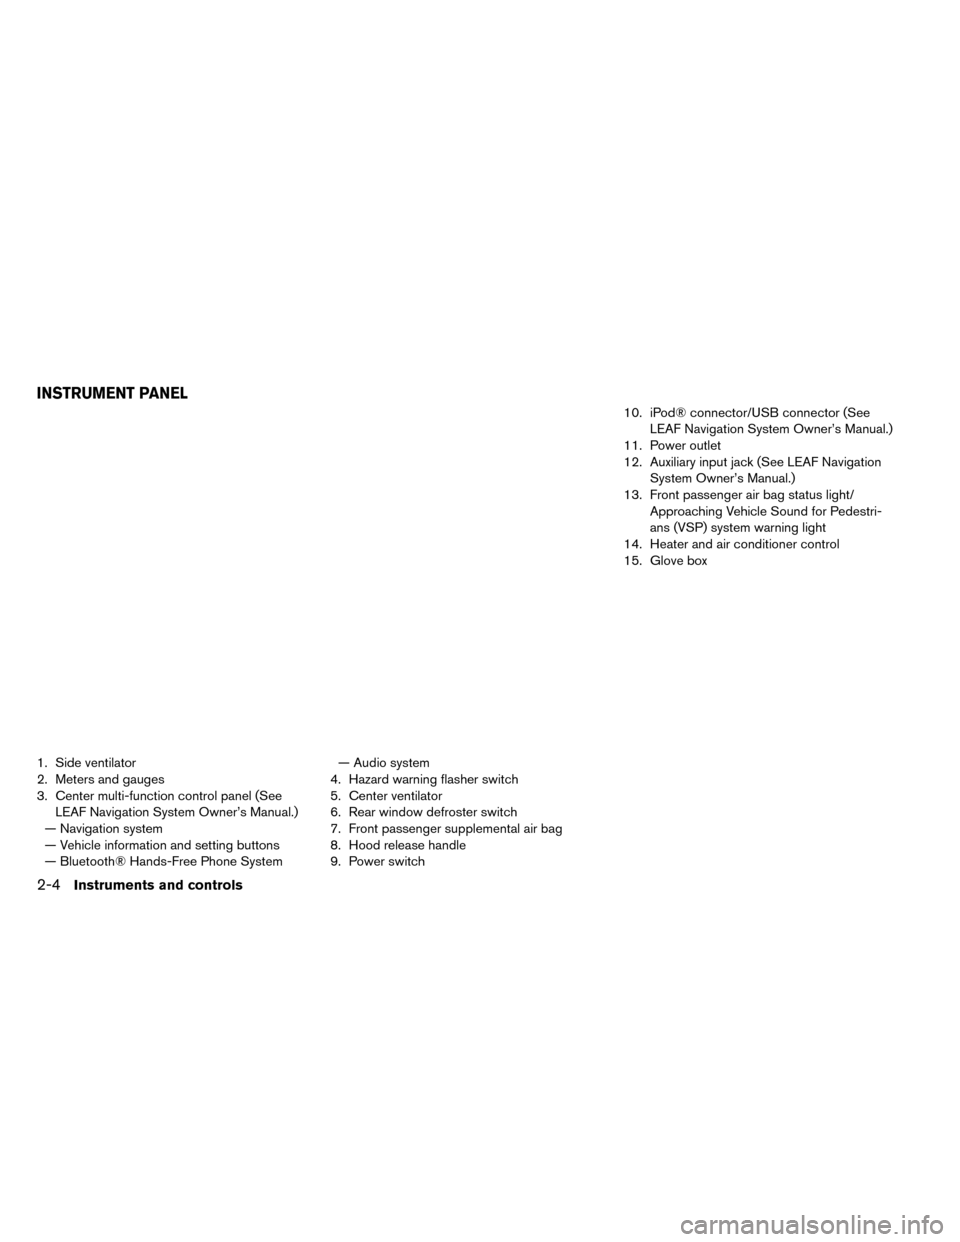 NISSAN LEAF 2015 1.G User Guide 1. Side ventilator
2. Meters and gauges
3. Center multi-function control panel (SeeLEAF Navigation System Owner’s Manual.)
— Navigation system
— Vehicle information and setting buttons
— Bluet